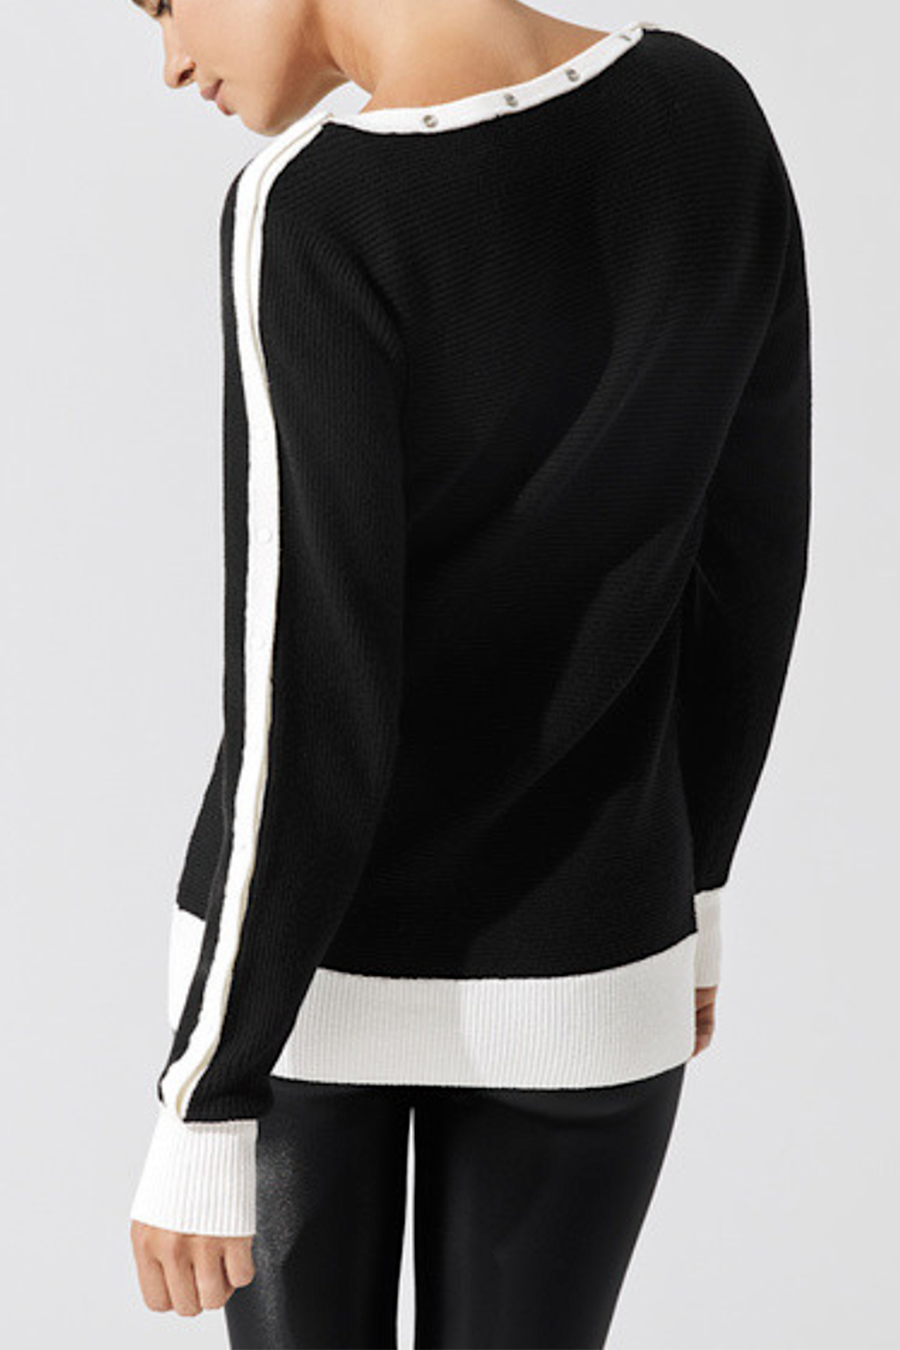 Intercept Sweater | Black/White - Main Image Number 2 of 2